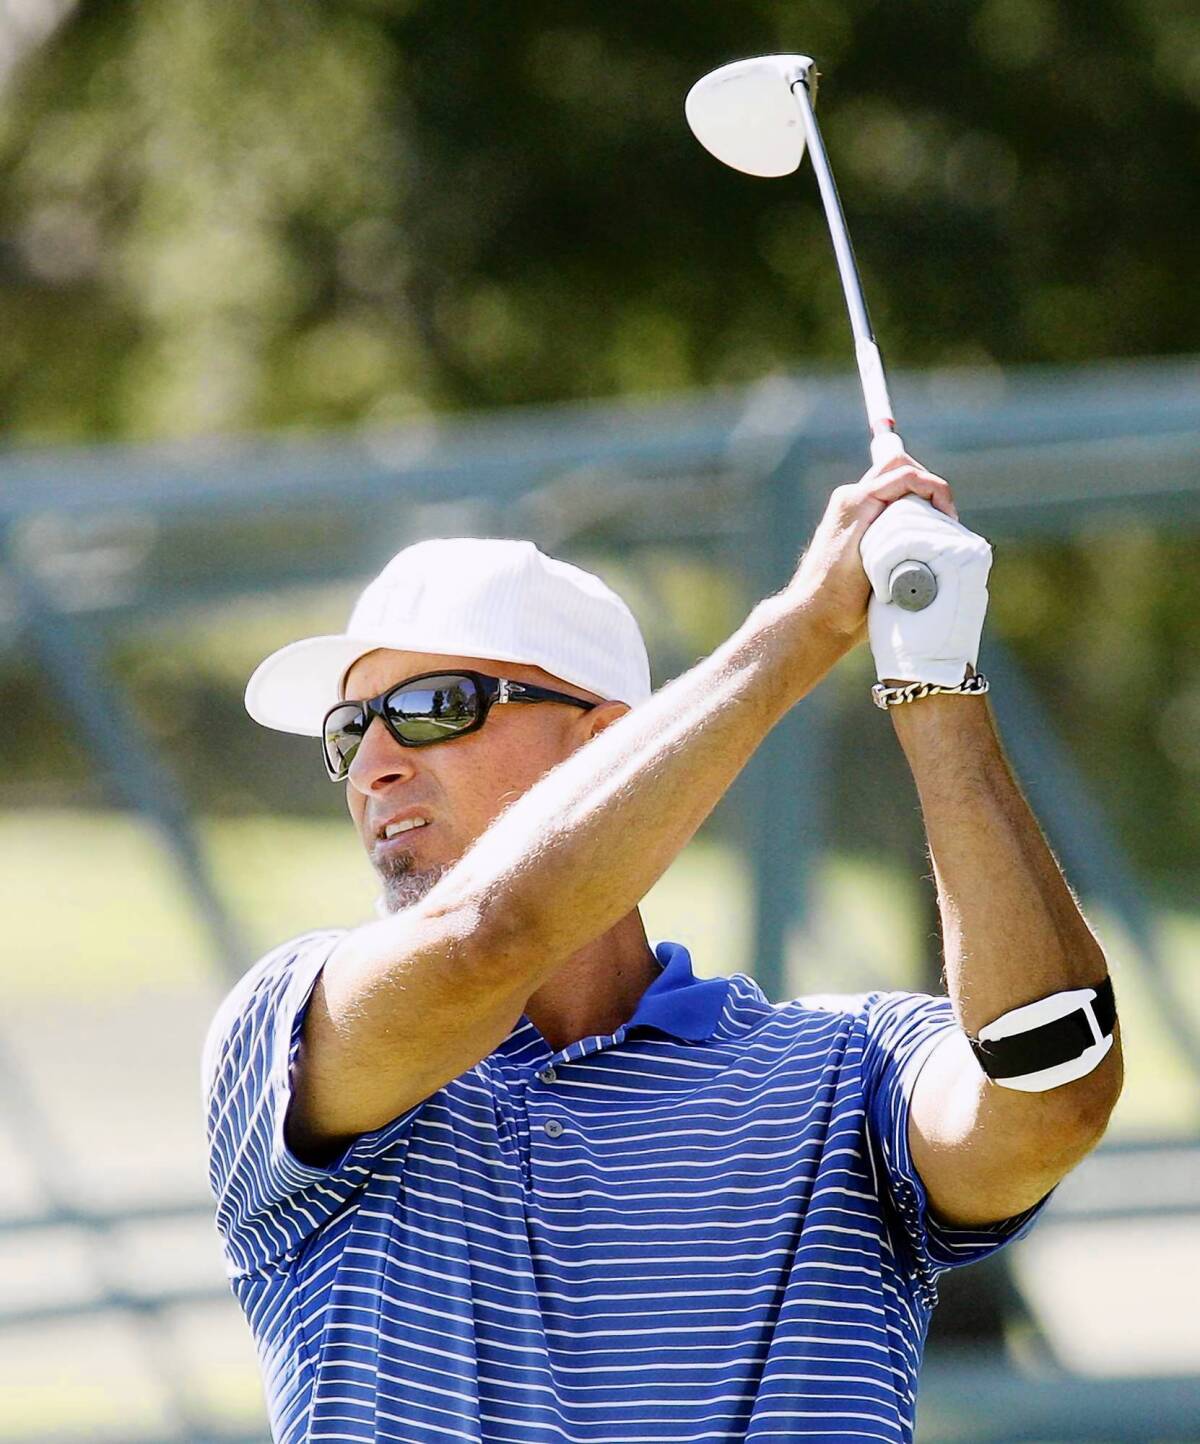 Jon Levitt, a Covina resident, won the Glendale City Golf Championship on Tuesday.